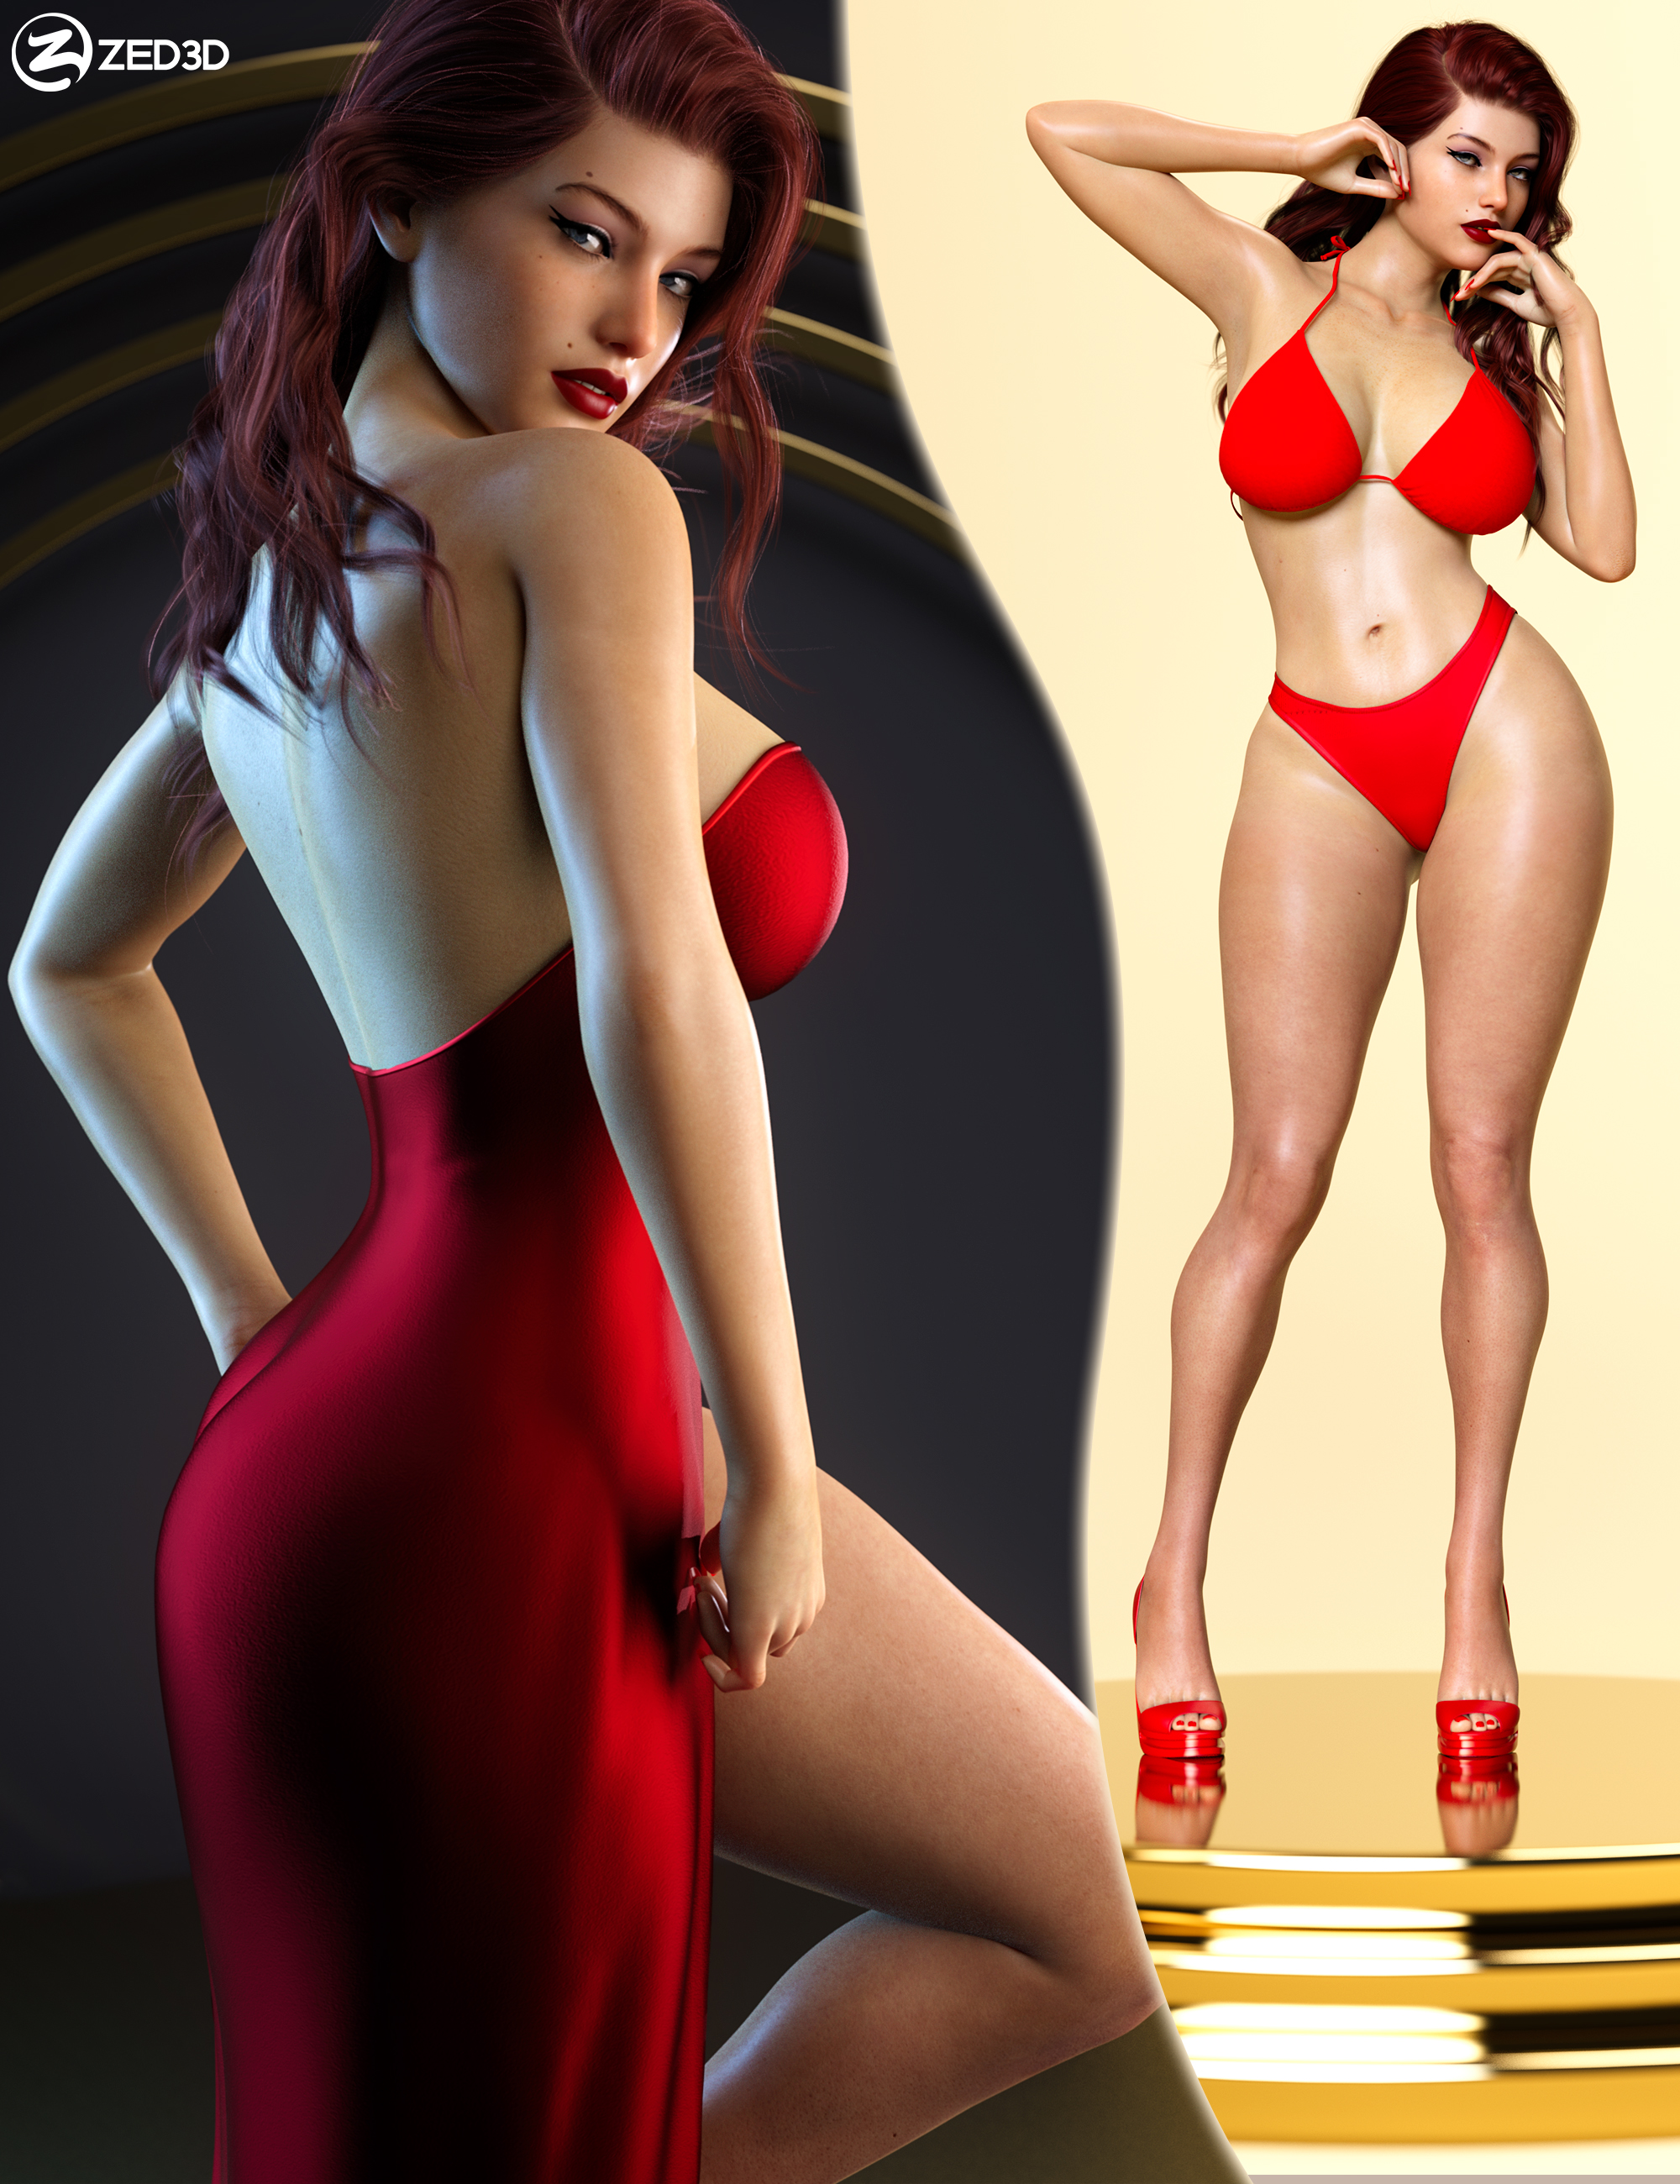 Z Hollywood Glam Shape and Pose Mega Set by: Zeddicuss, 3D Models by Daz 3D